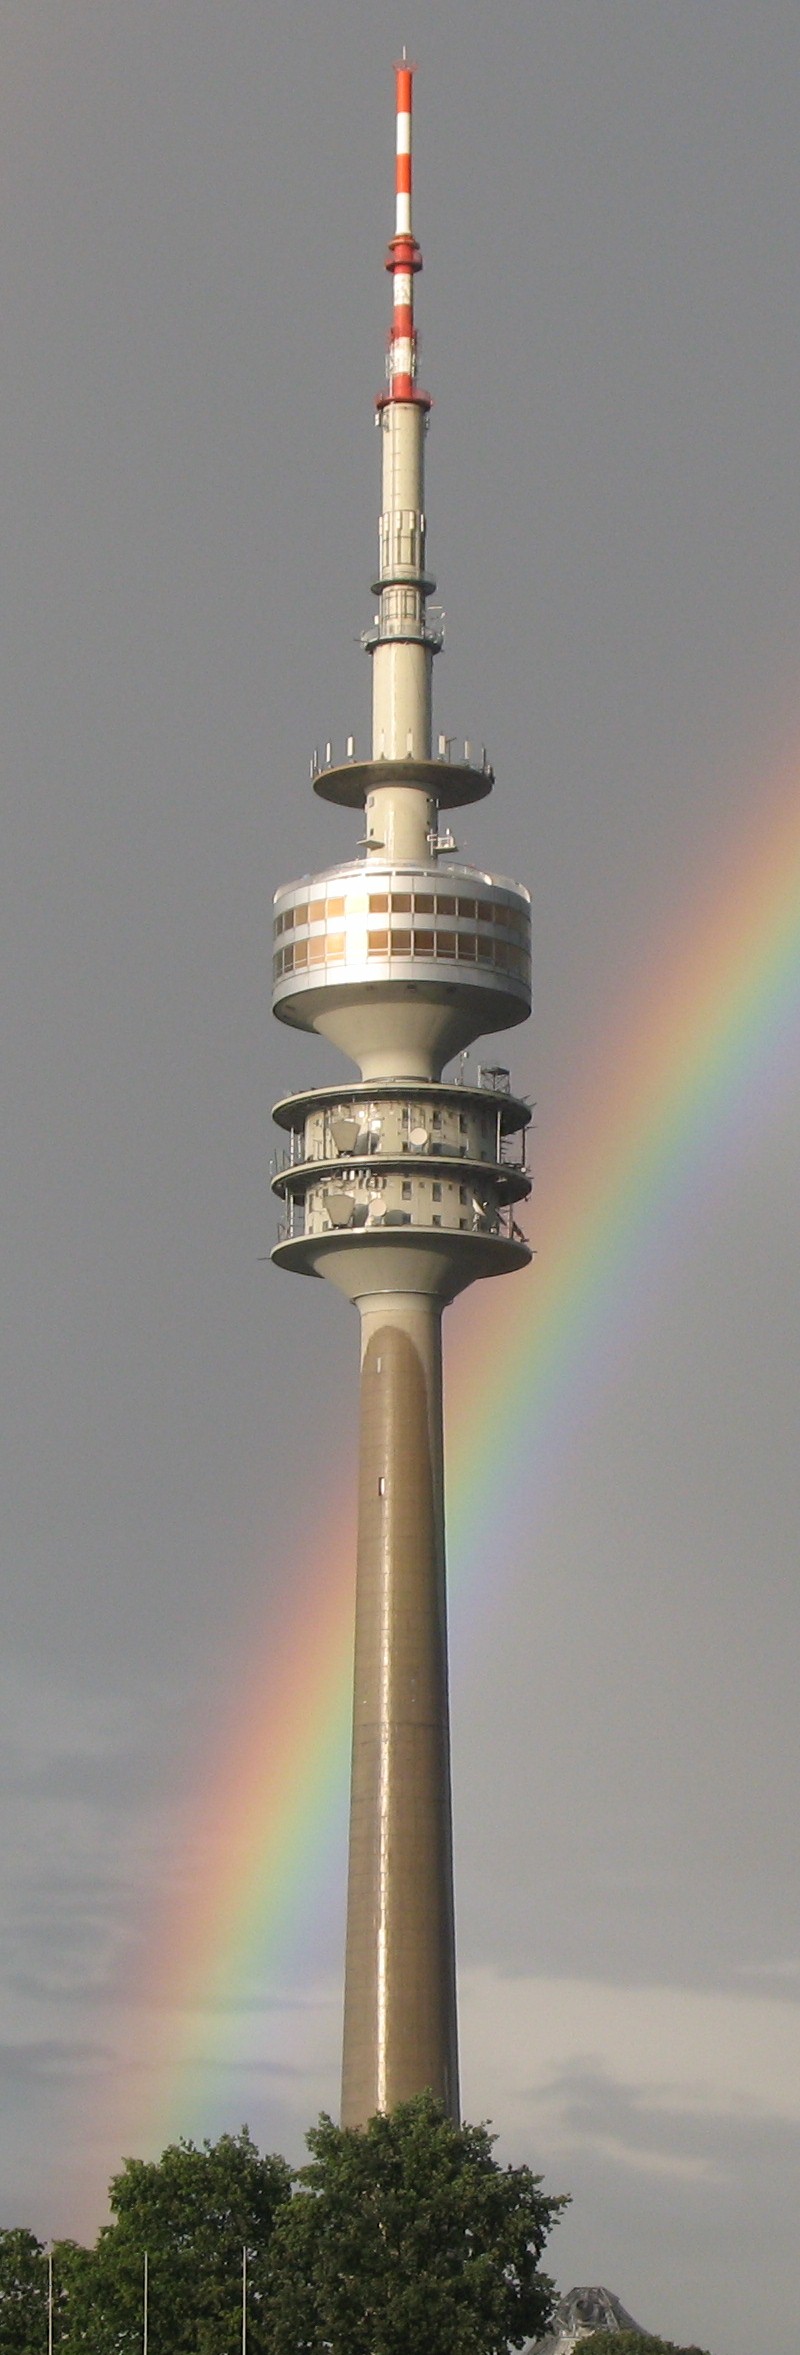 2529a - München - Olympiaturm from Olympiastadion - Genesis